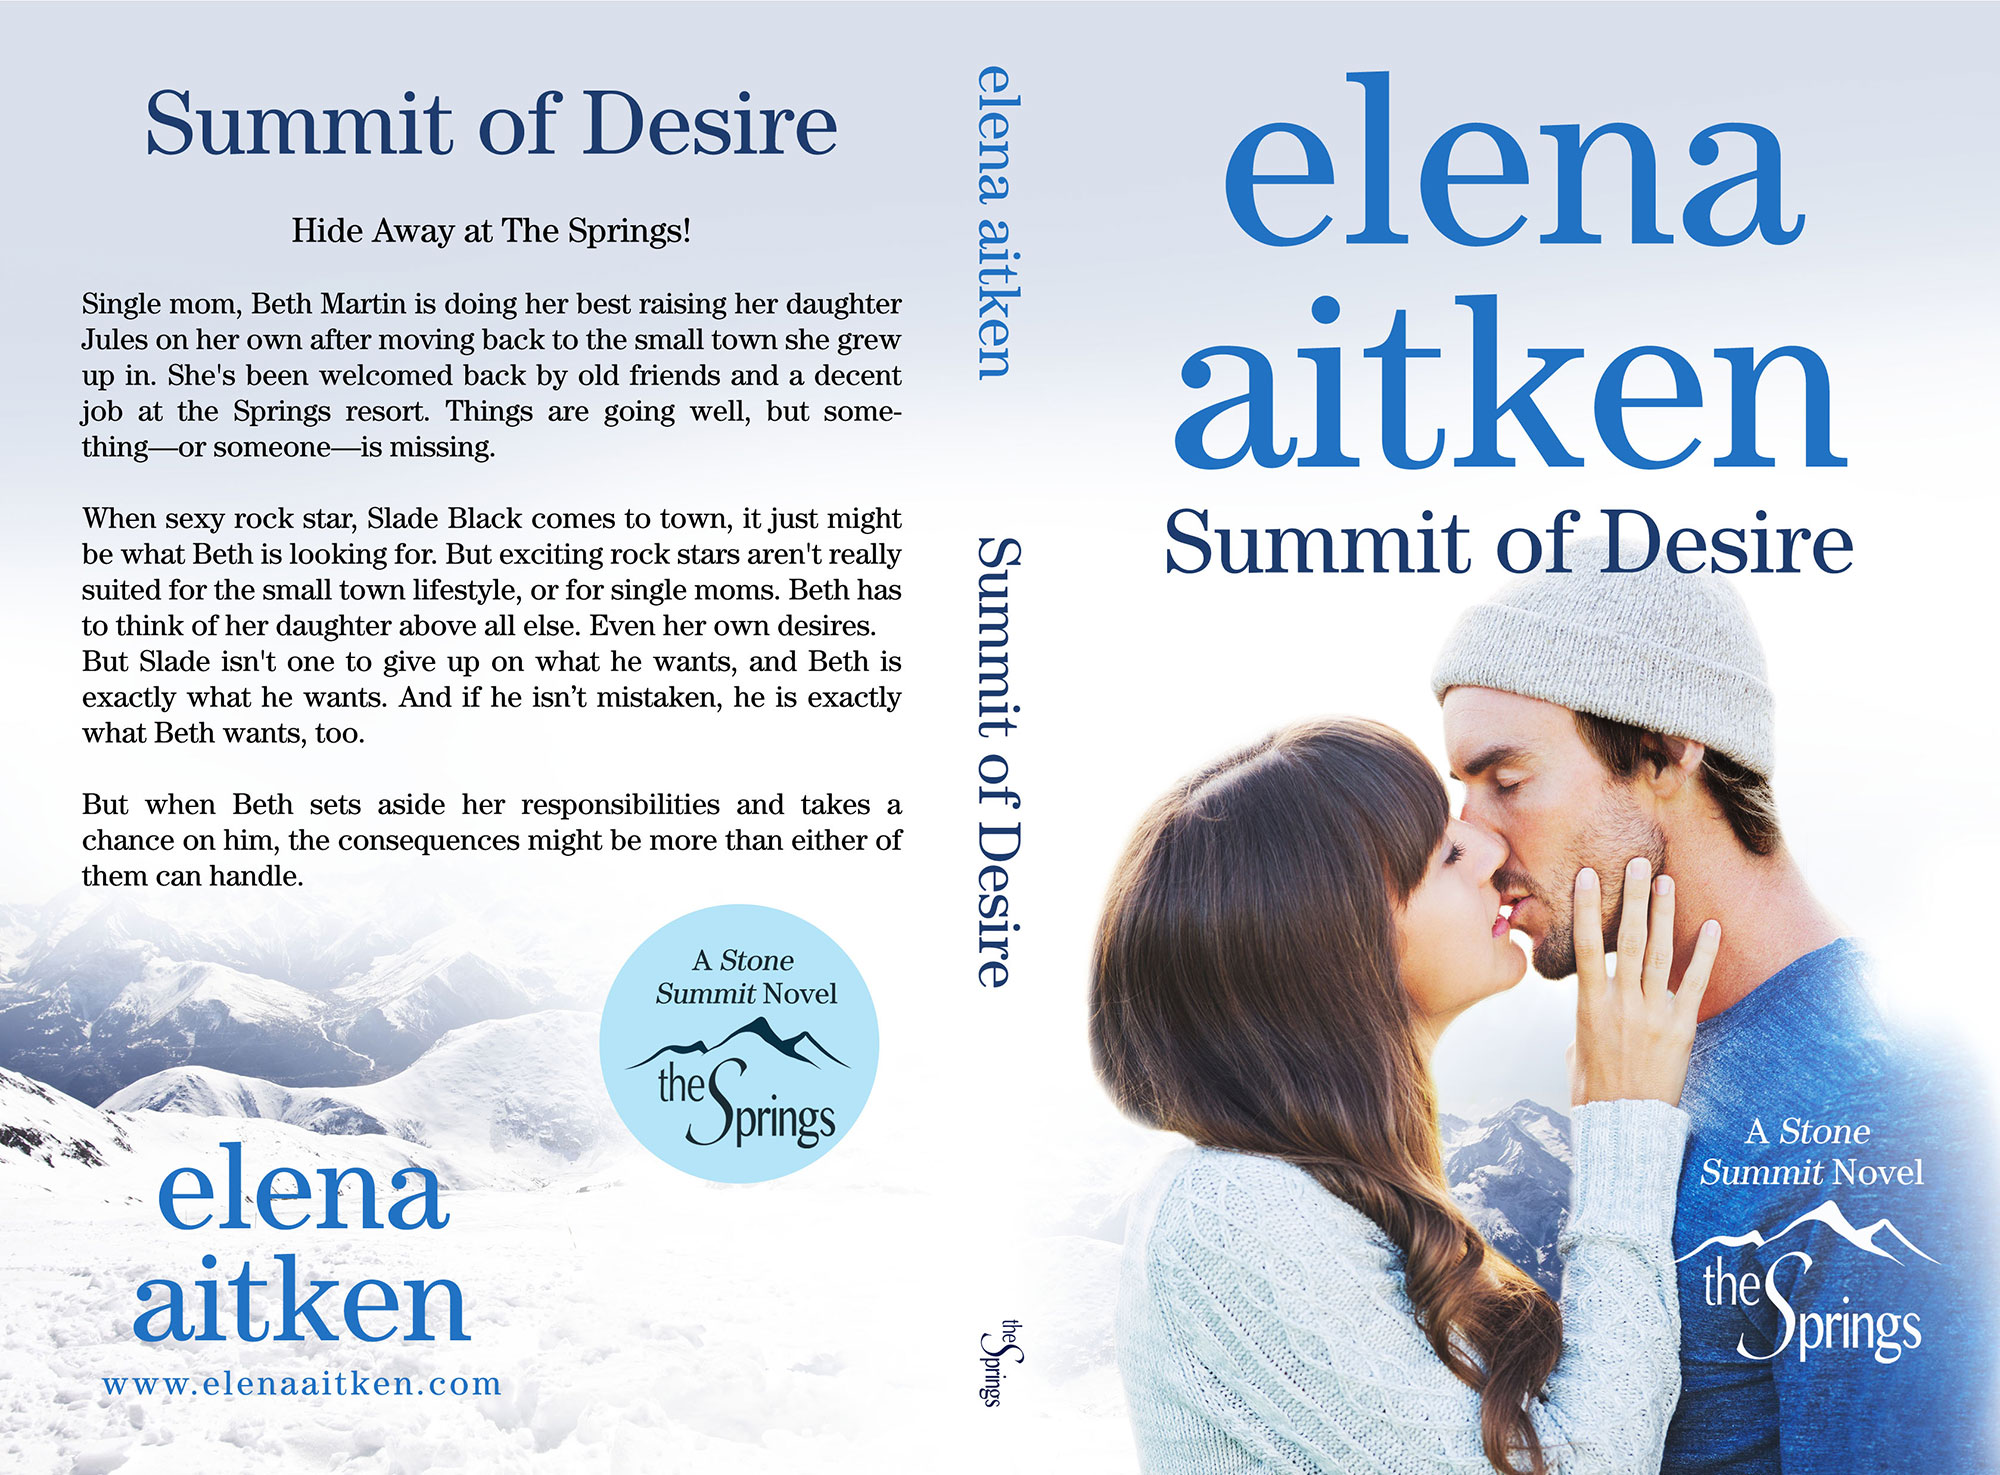 Summit of Desire by Elena Aitken (Print Coverflat)